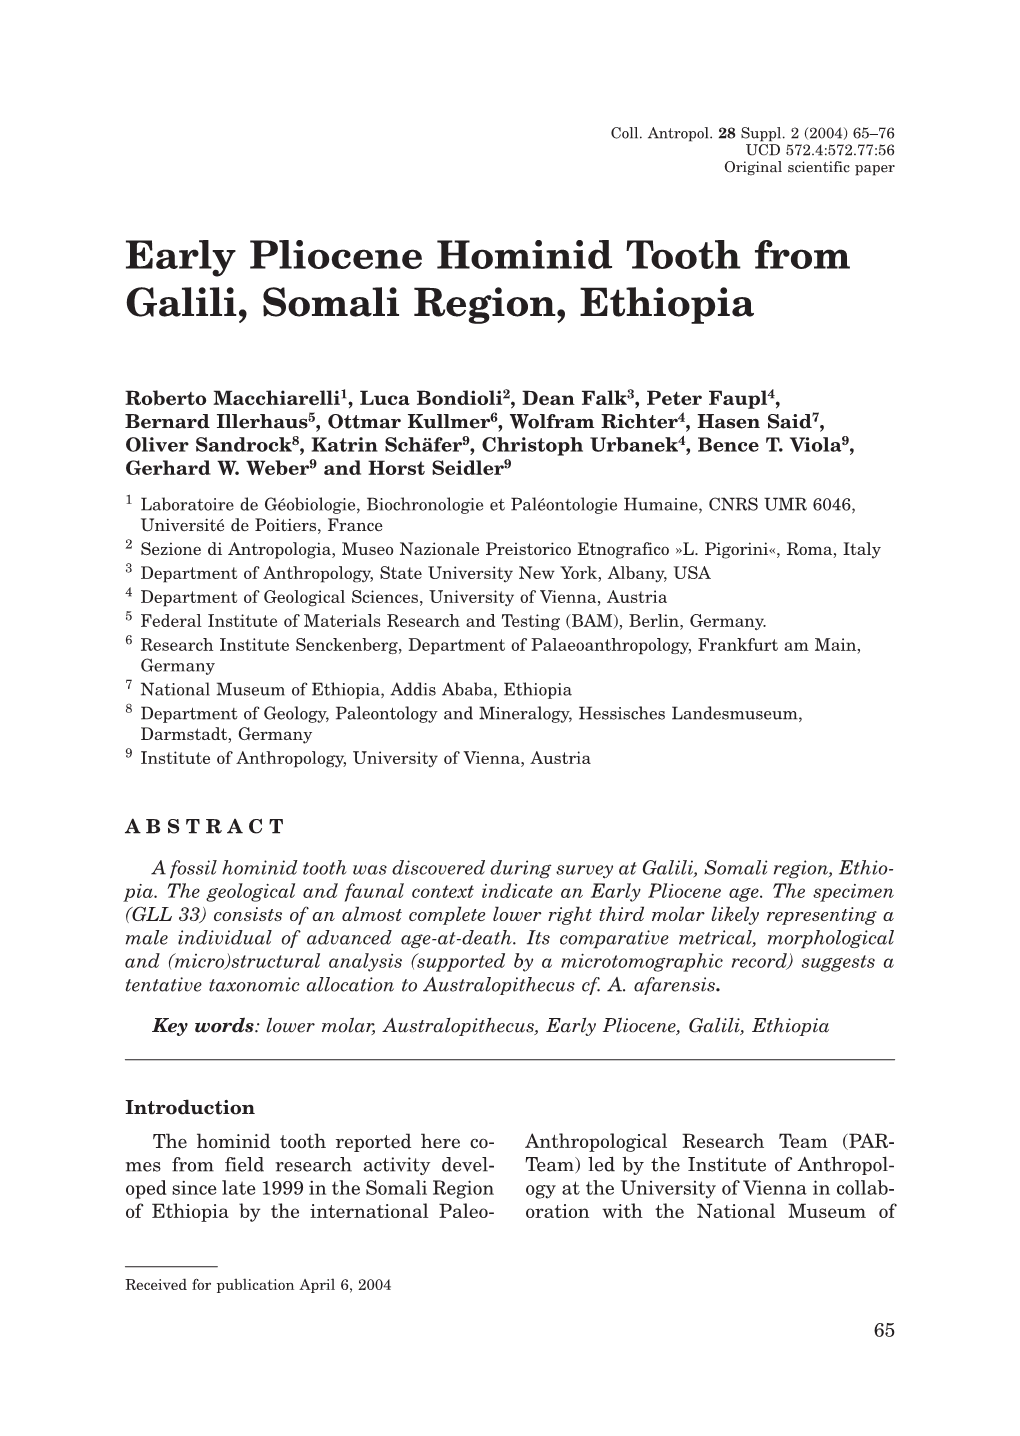 Early Pliocene Hominid Tooth from Galili, Somali Region, Ethiopia